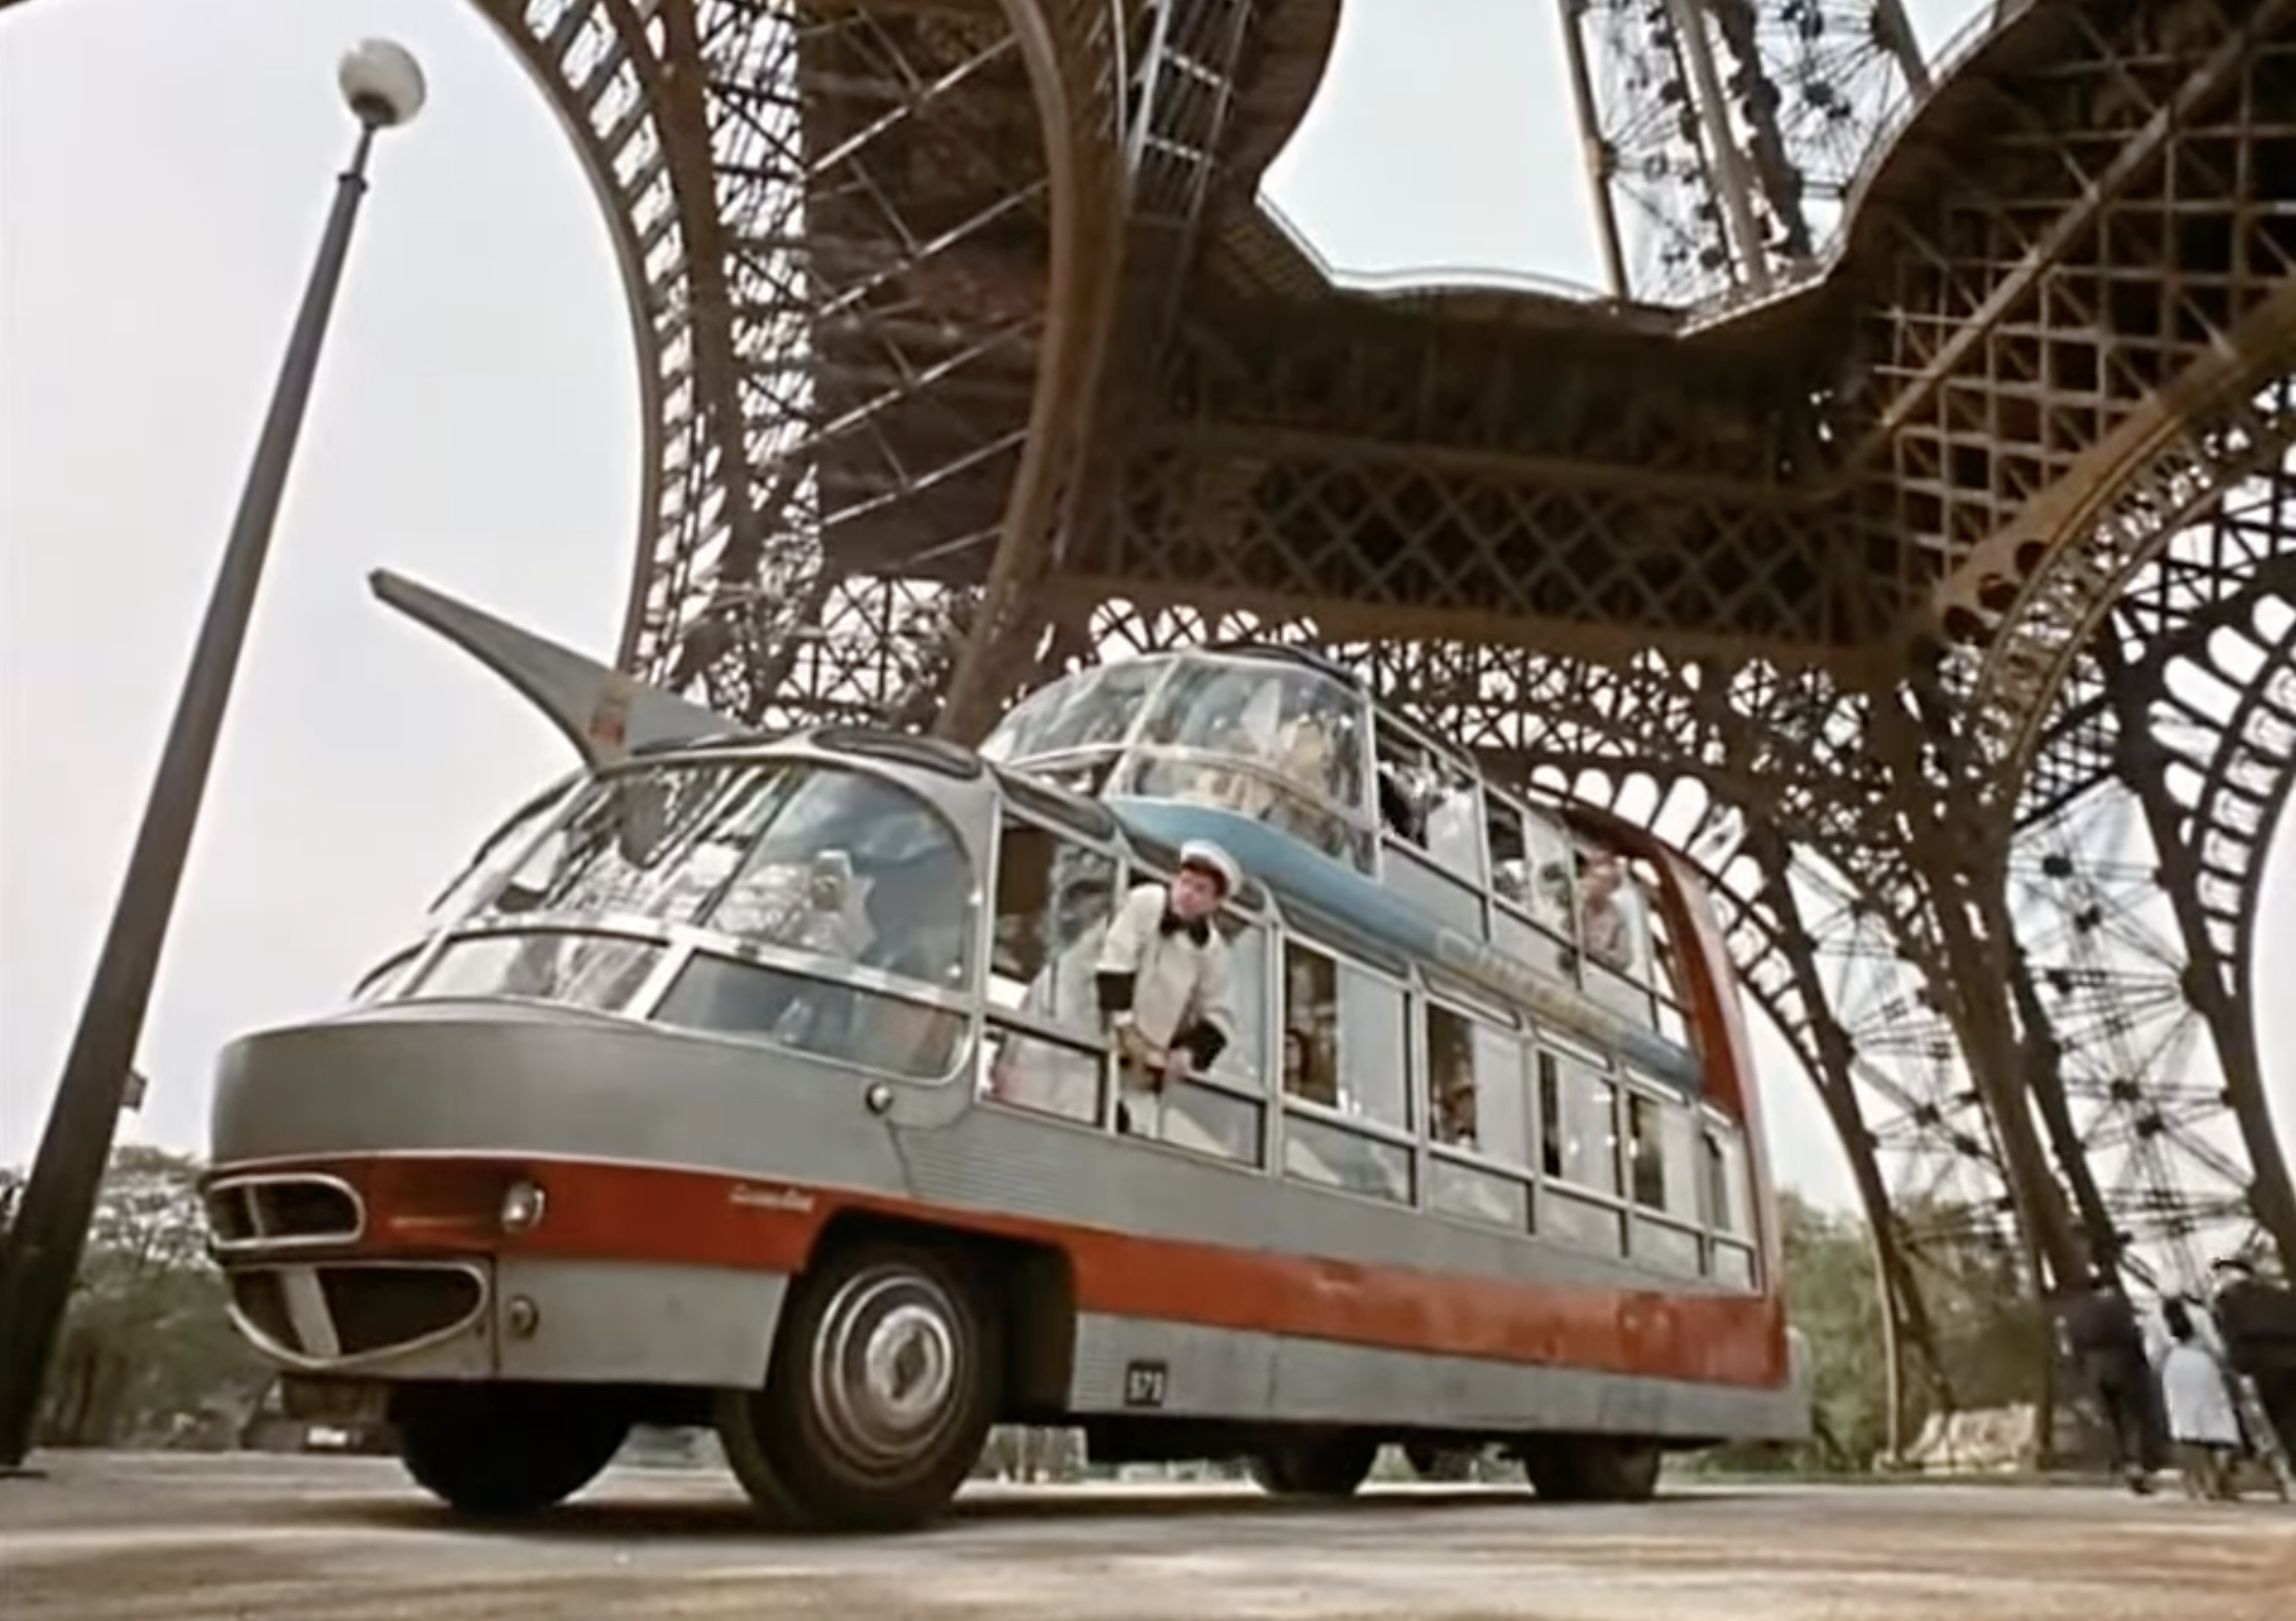 Last Citroën U55 Cityrama Parisian tour bus will finally be restored